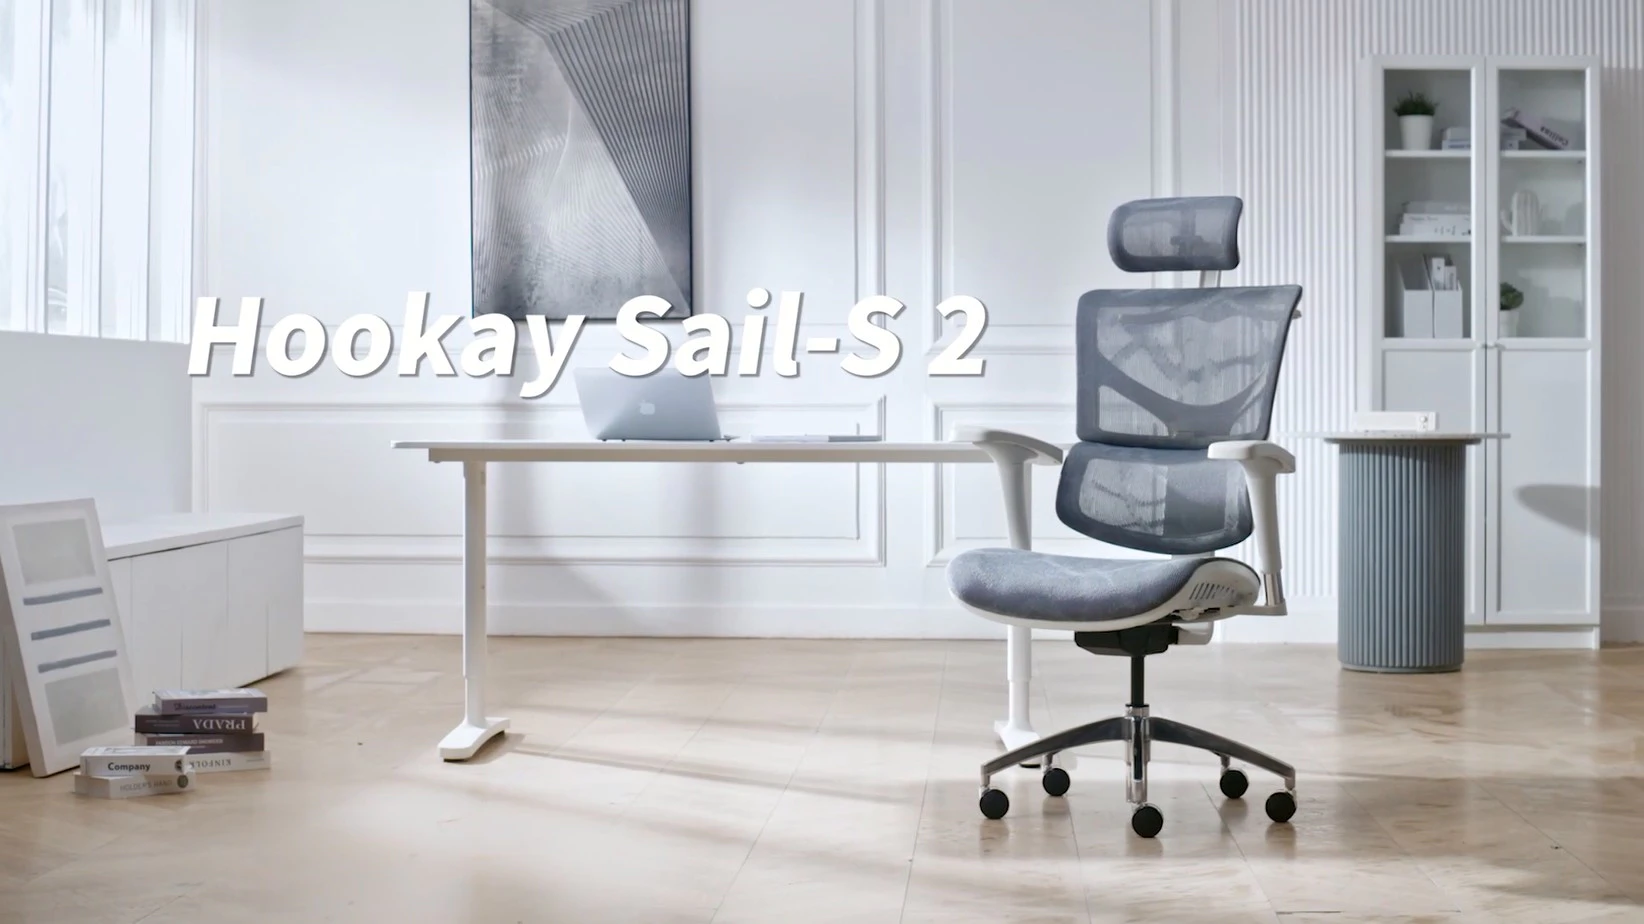 SailS2 ergonomic office chair